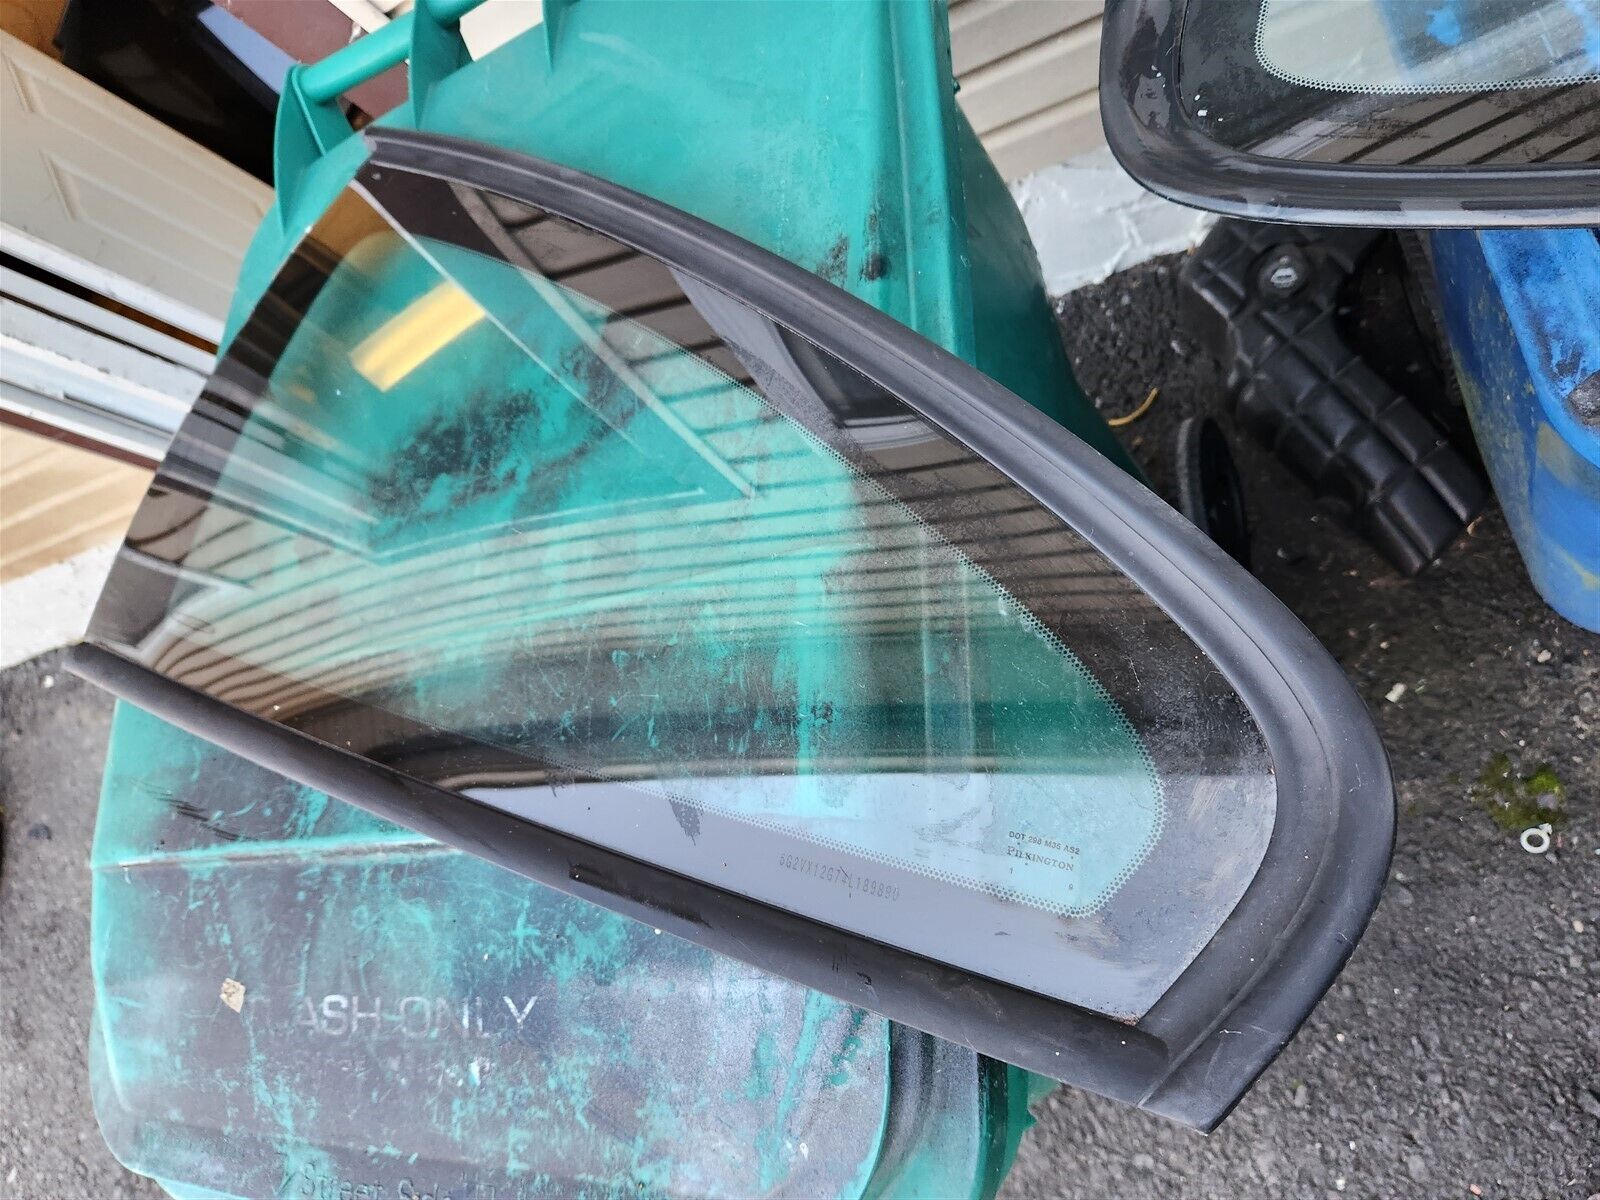 04-06 Pontiac GTO Side Quarter Glass Window REAR DRIVER SIDE LEFT Used NICE